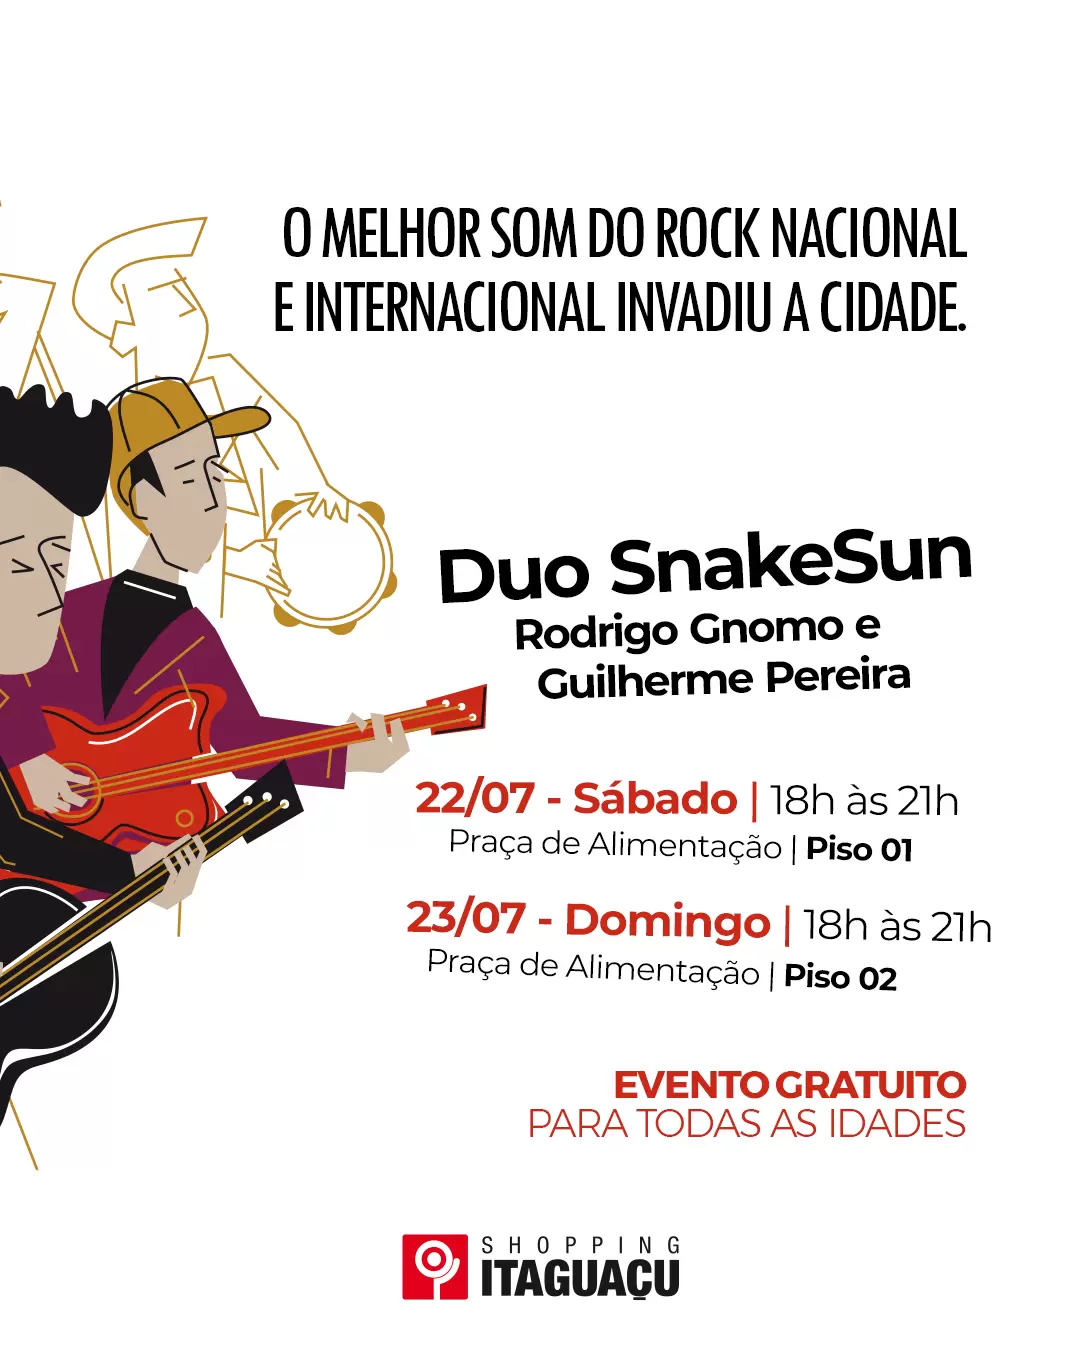 Shopping Itaguaçu promove shows de Rock’n’Roll com Snakesun Duo